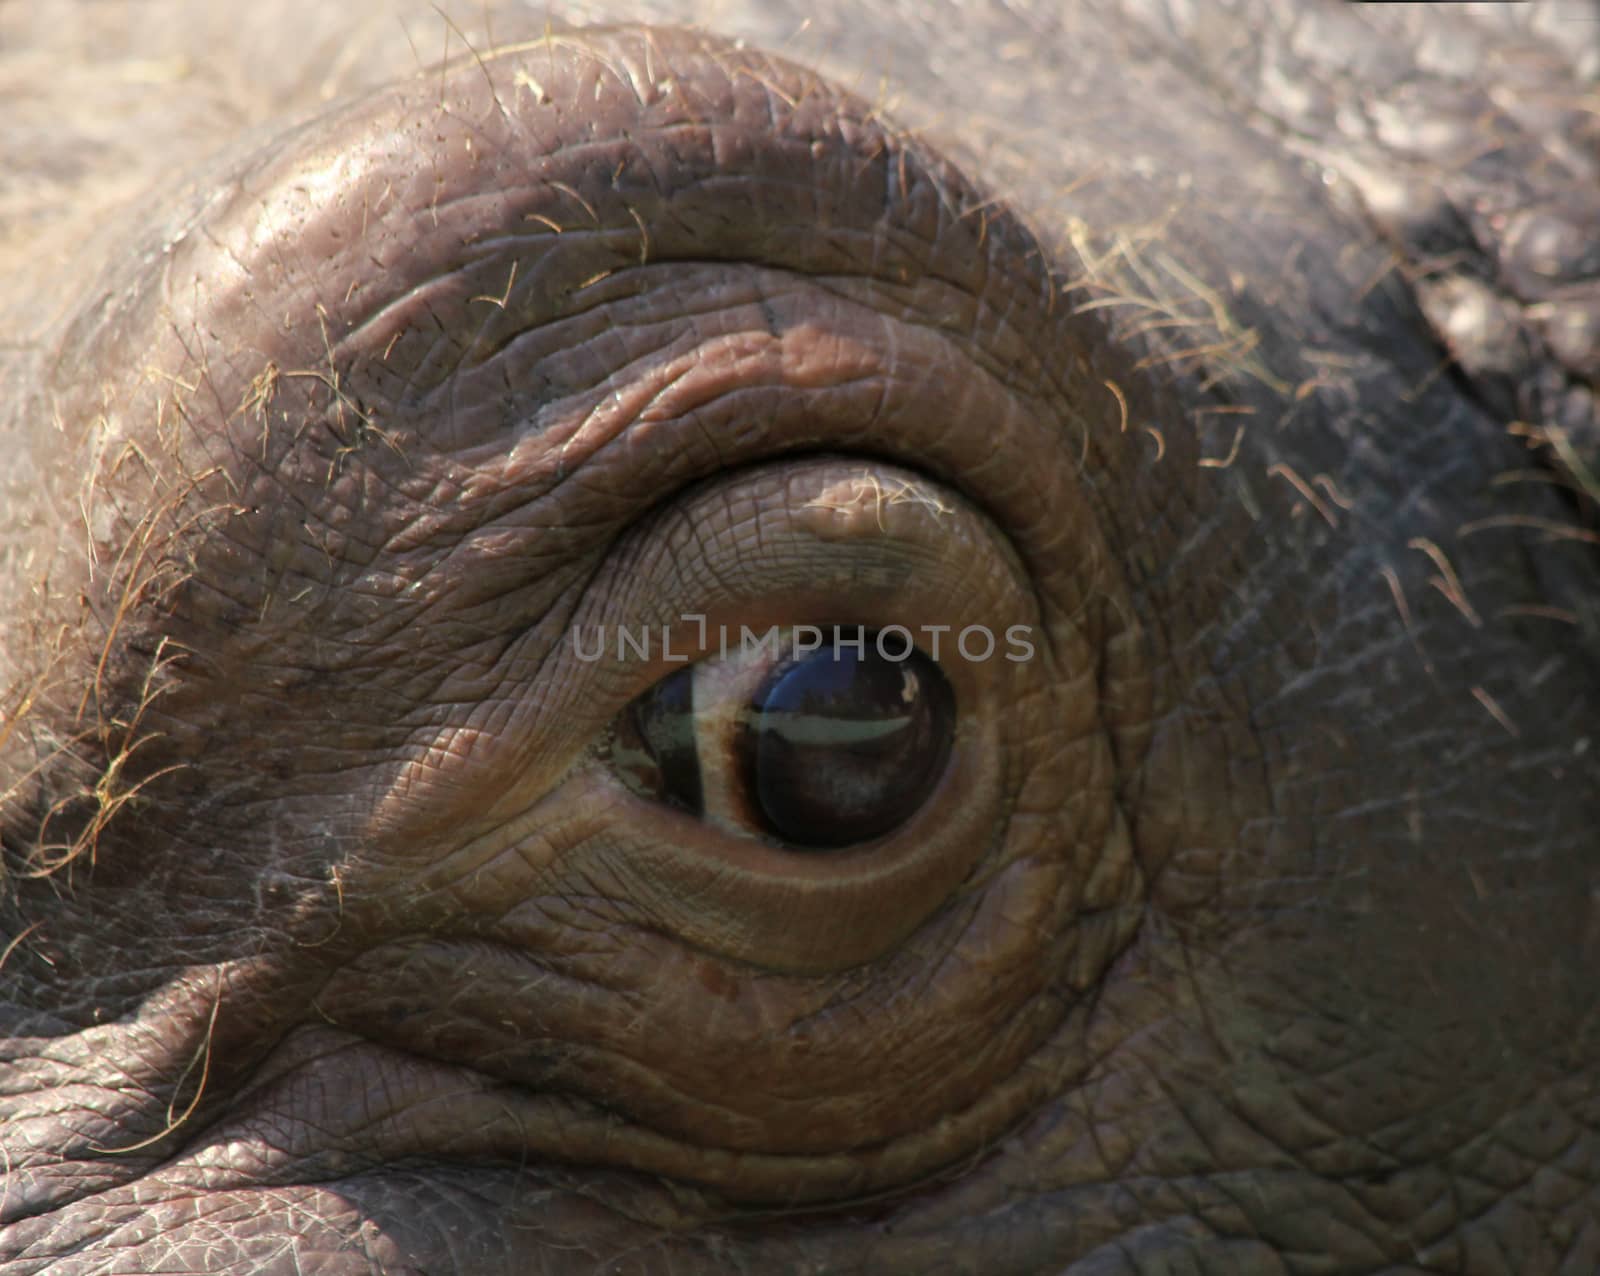 Hippo monitoring startled eyes at close range.